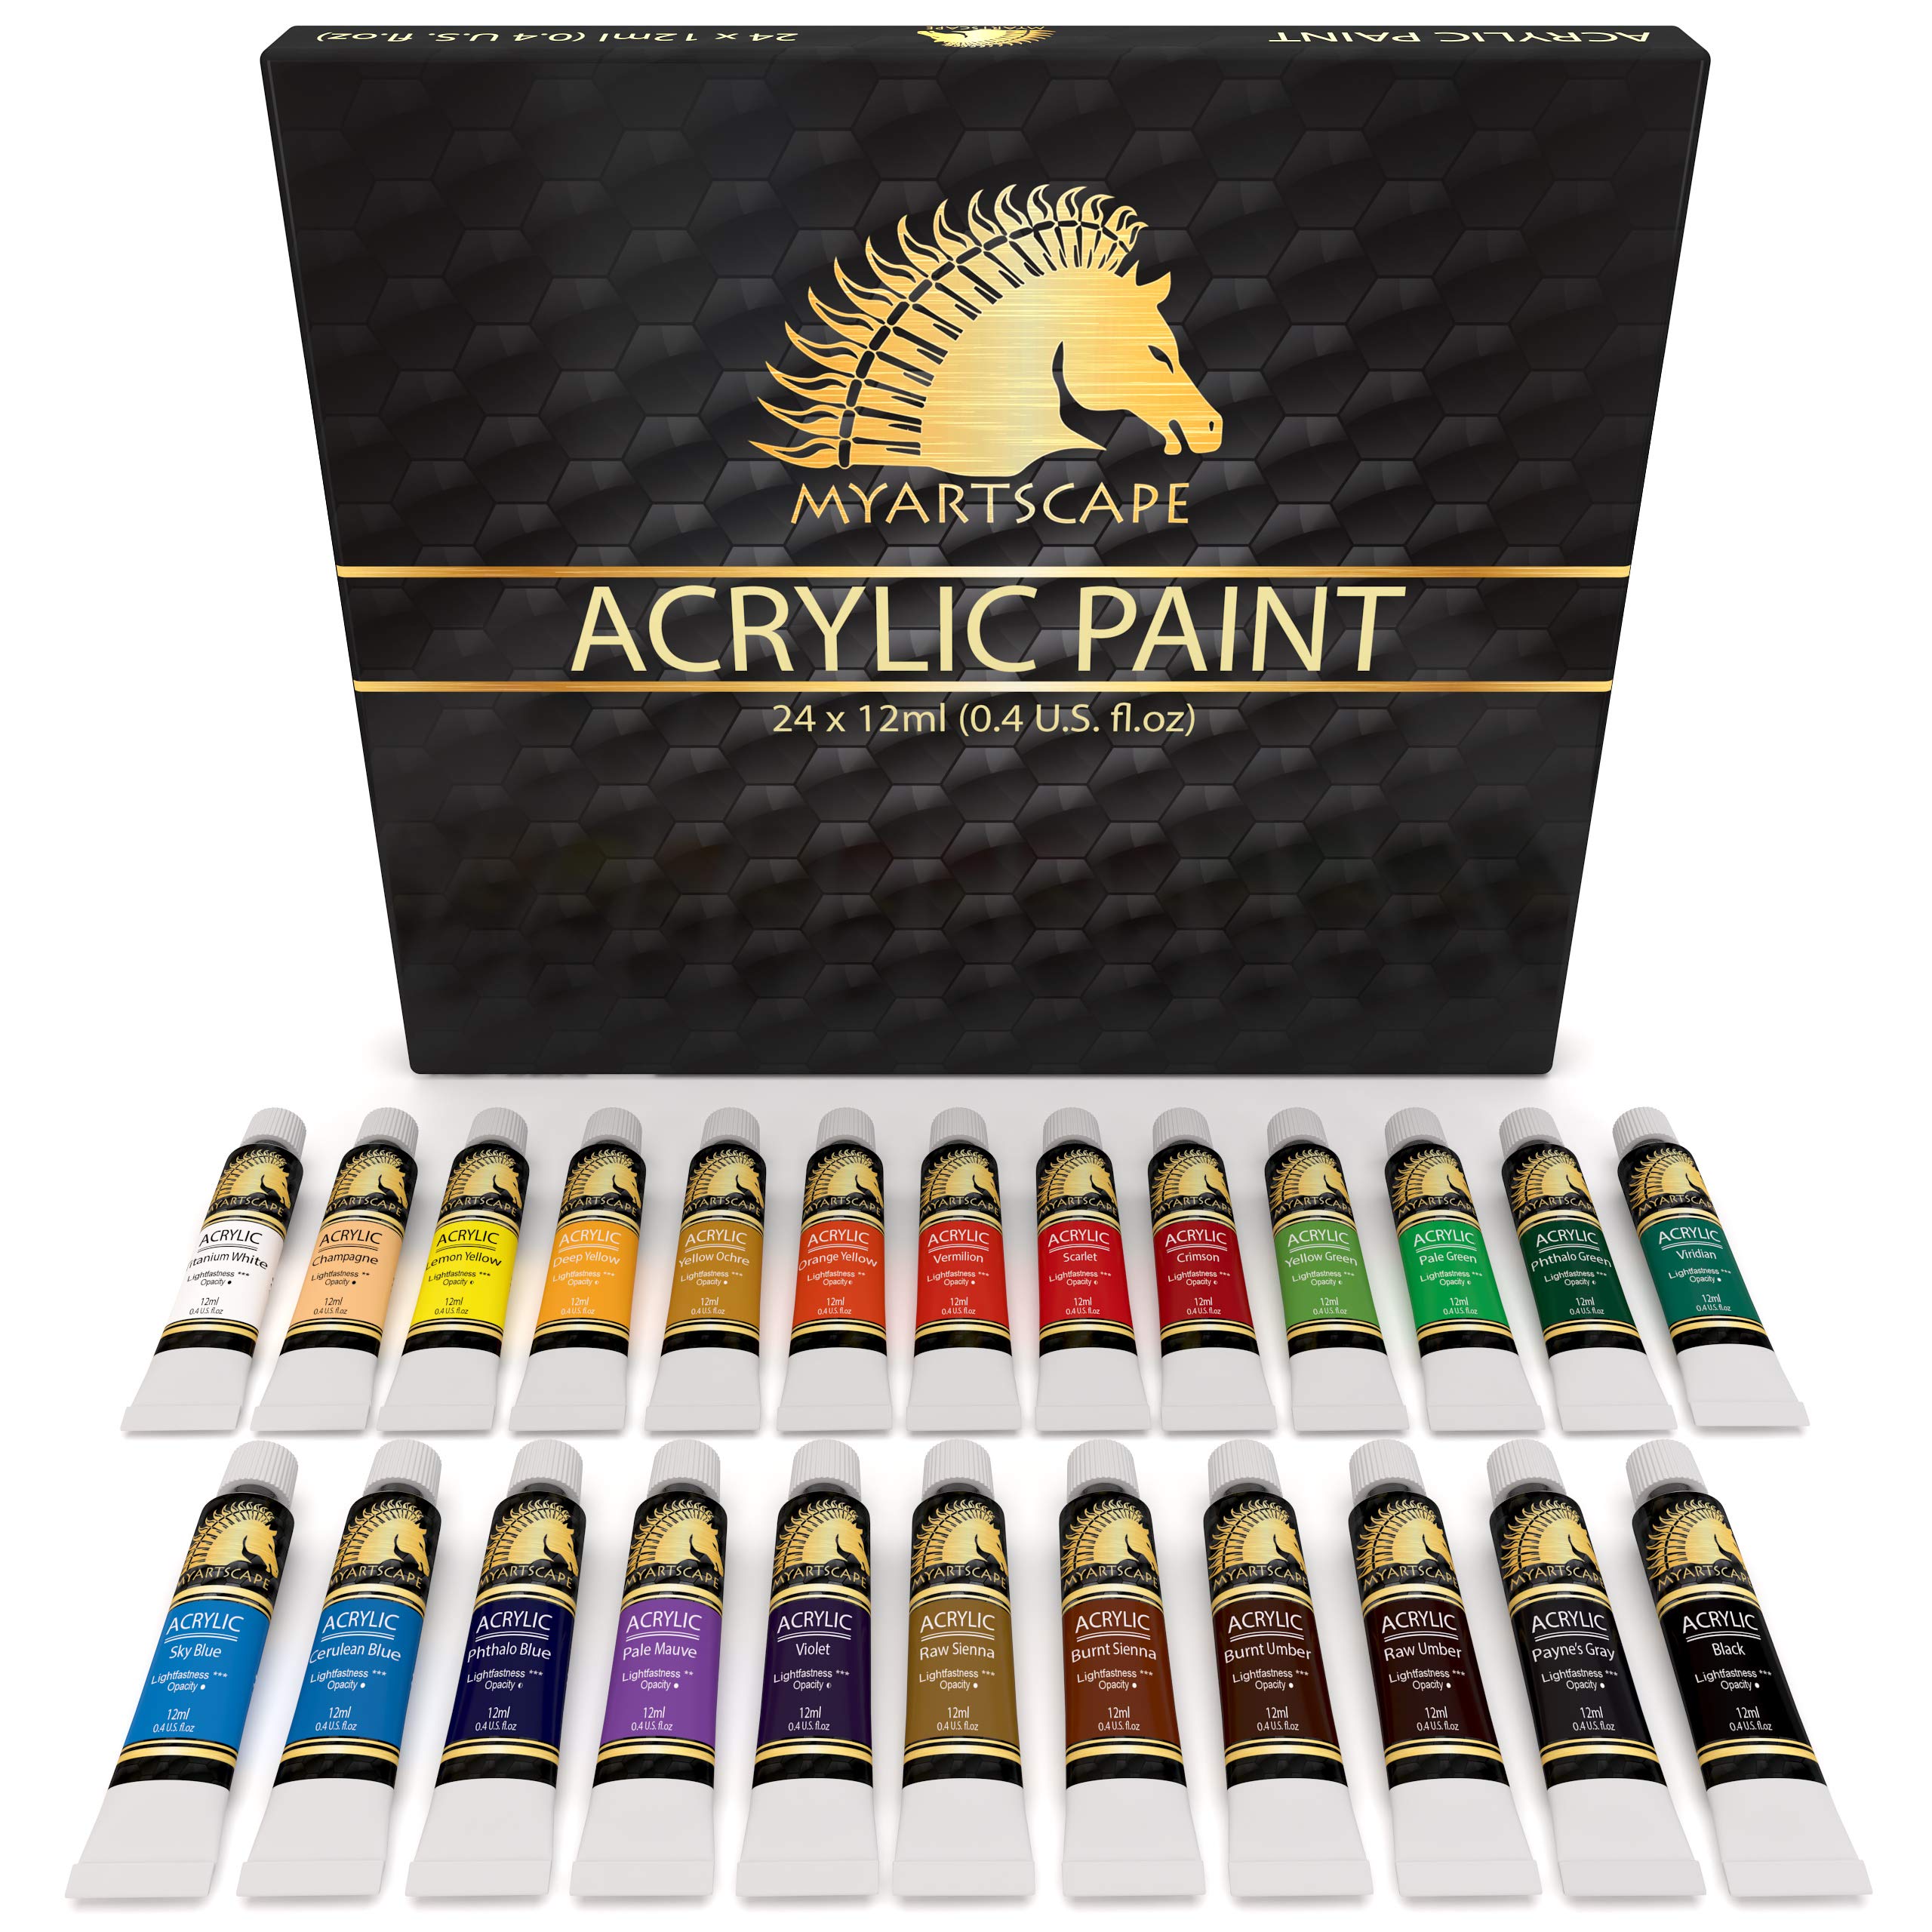 MyArtscape Acrylic Paint Set - 24 x 12ml Tubes - Lightfast - Heavy Body - Long Lasting - Vibrant Colors - Professional Art Supplies - Artist Quality Paints